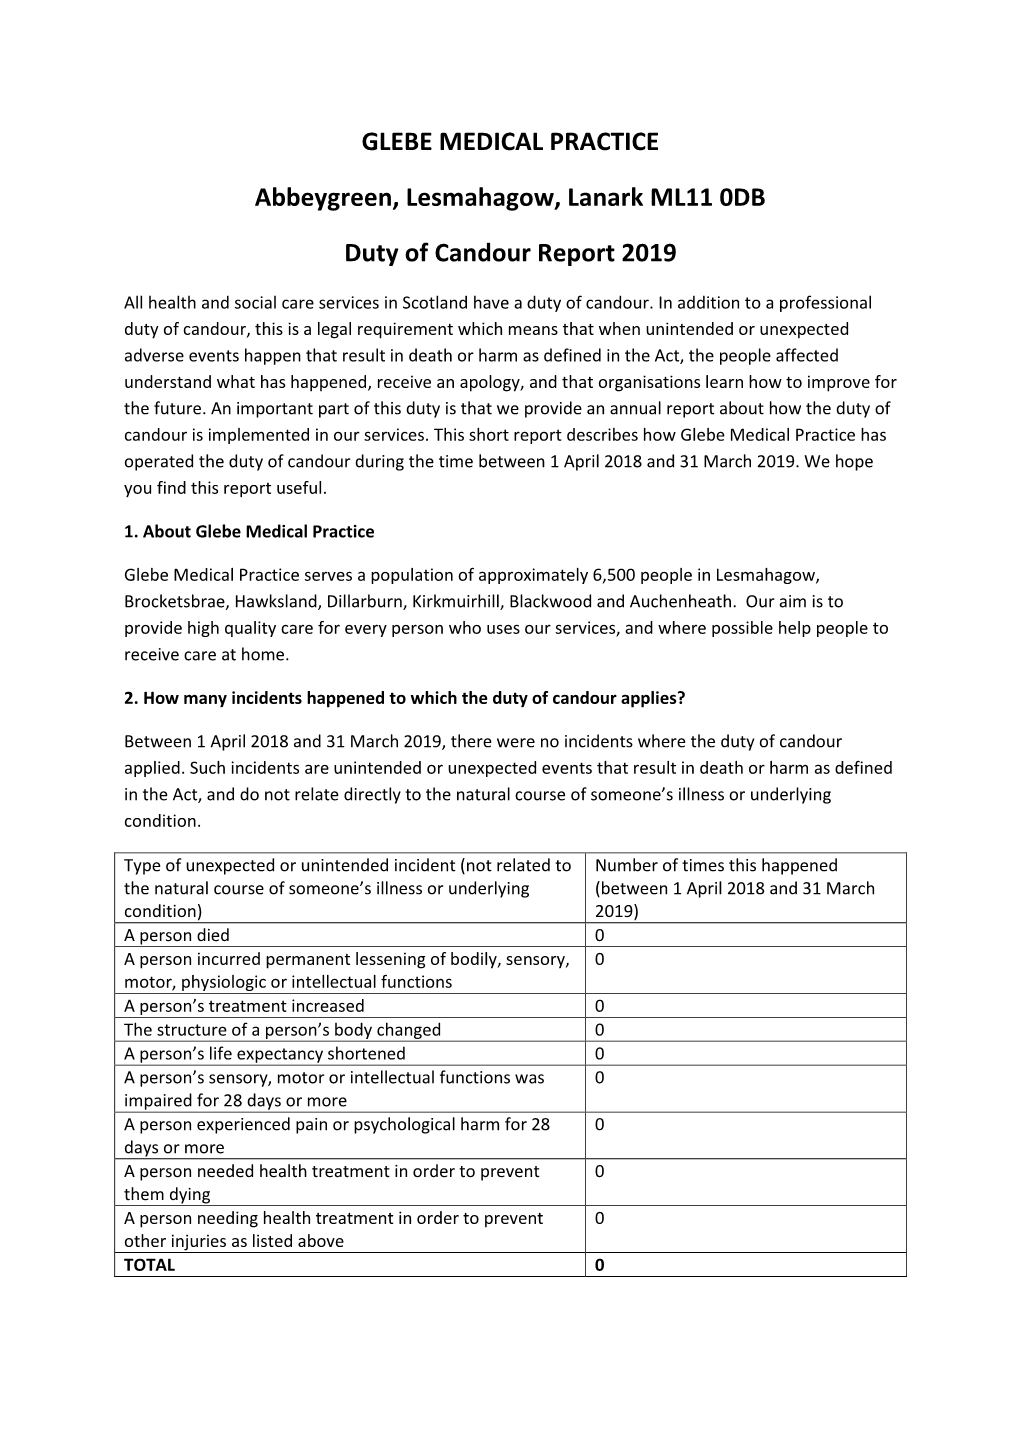 GLEBE MEDICAL PRACTICE Abbeygreen, Lesmahagow, Lanark ML11 0DB Duty of Candour Report 2019